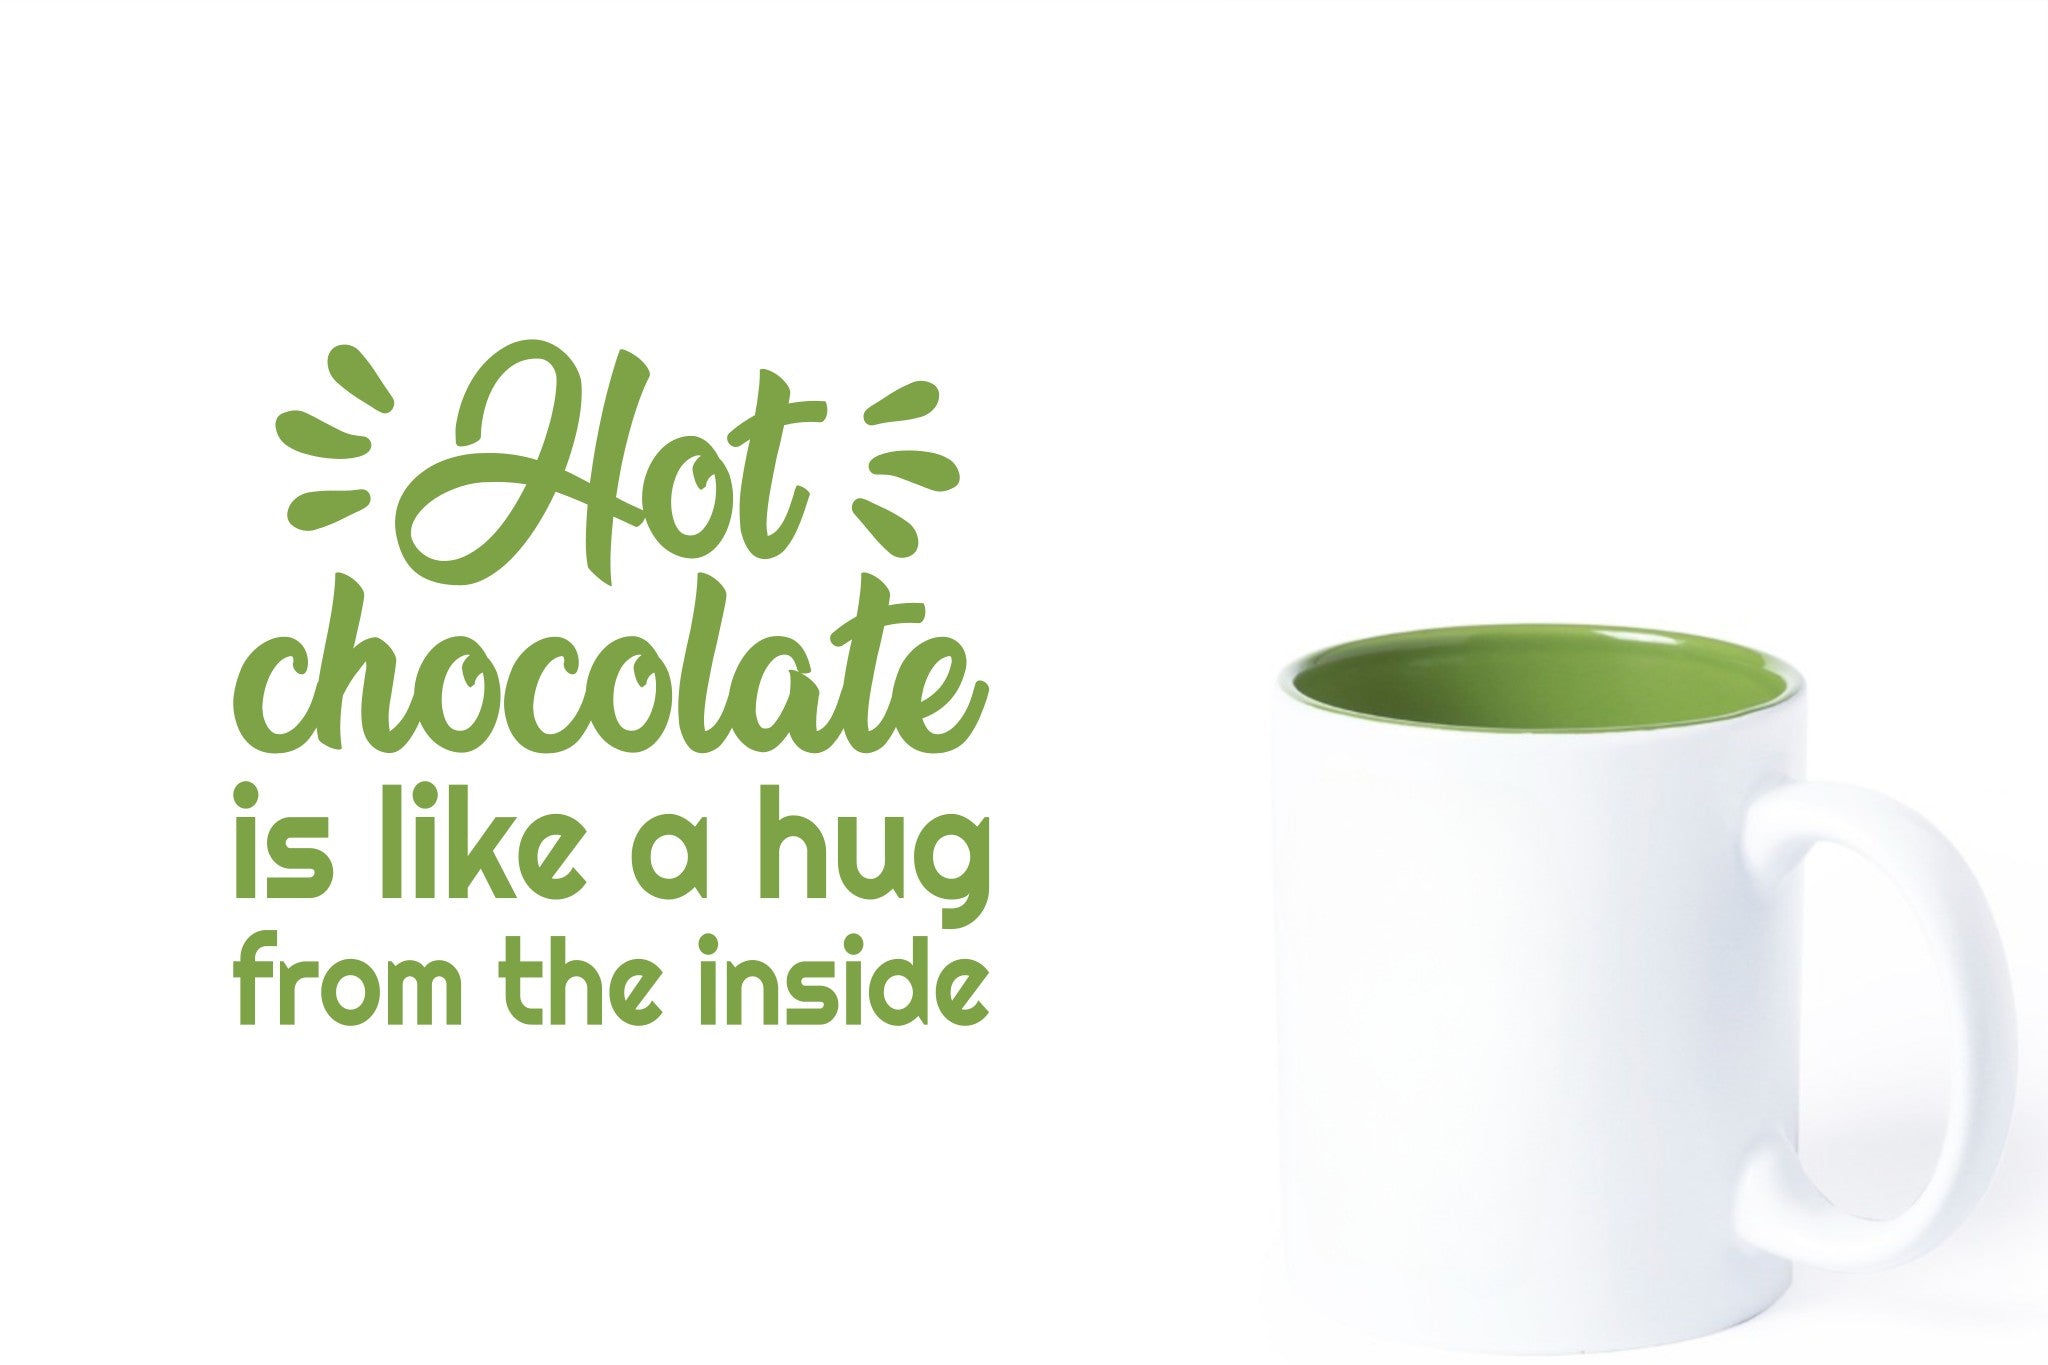 witte keramische mok met groene gravure  'Hot chocolate is like a hug from the inside'.